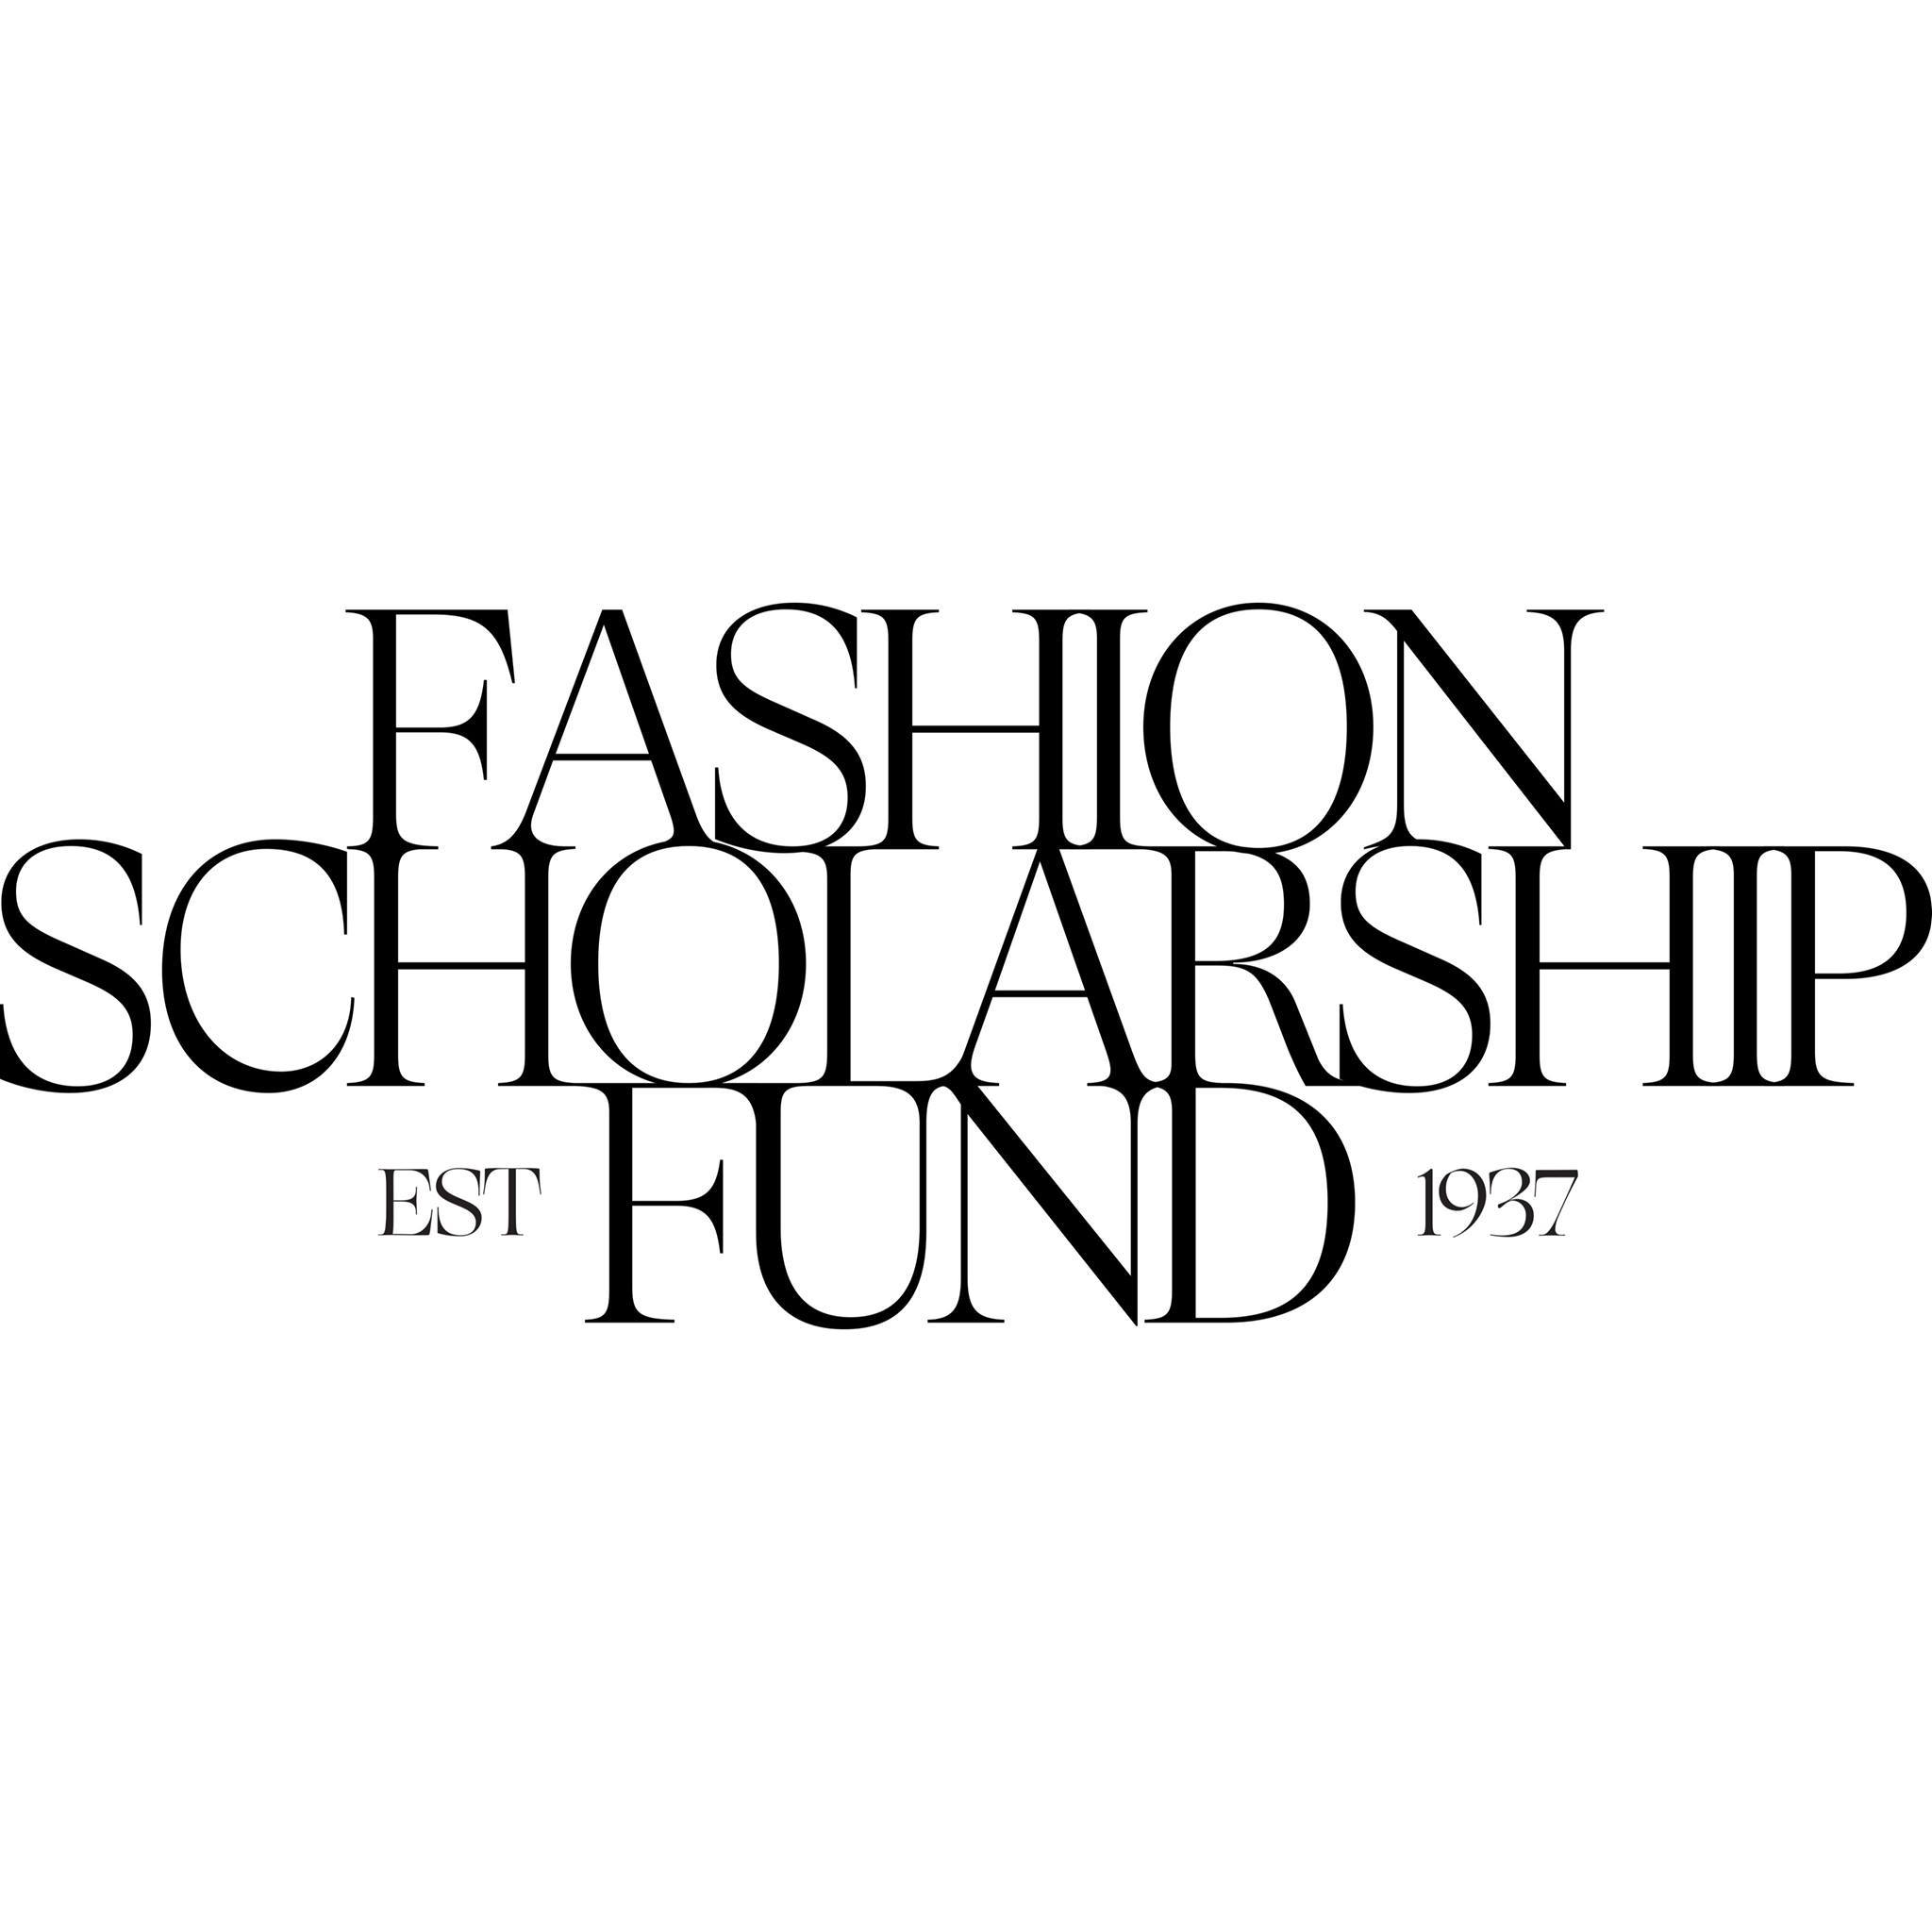 Fashion Scholarship Fund est. 1937